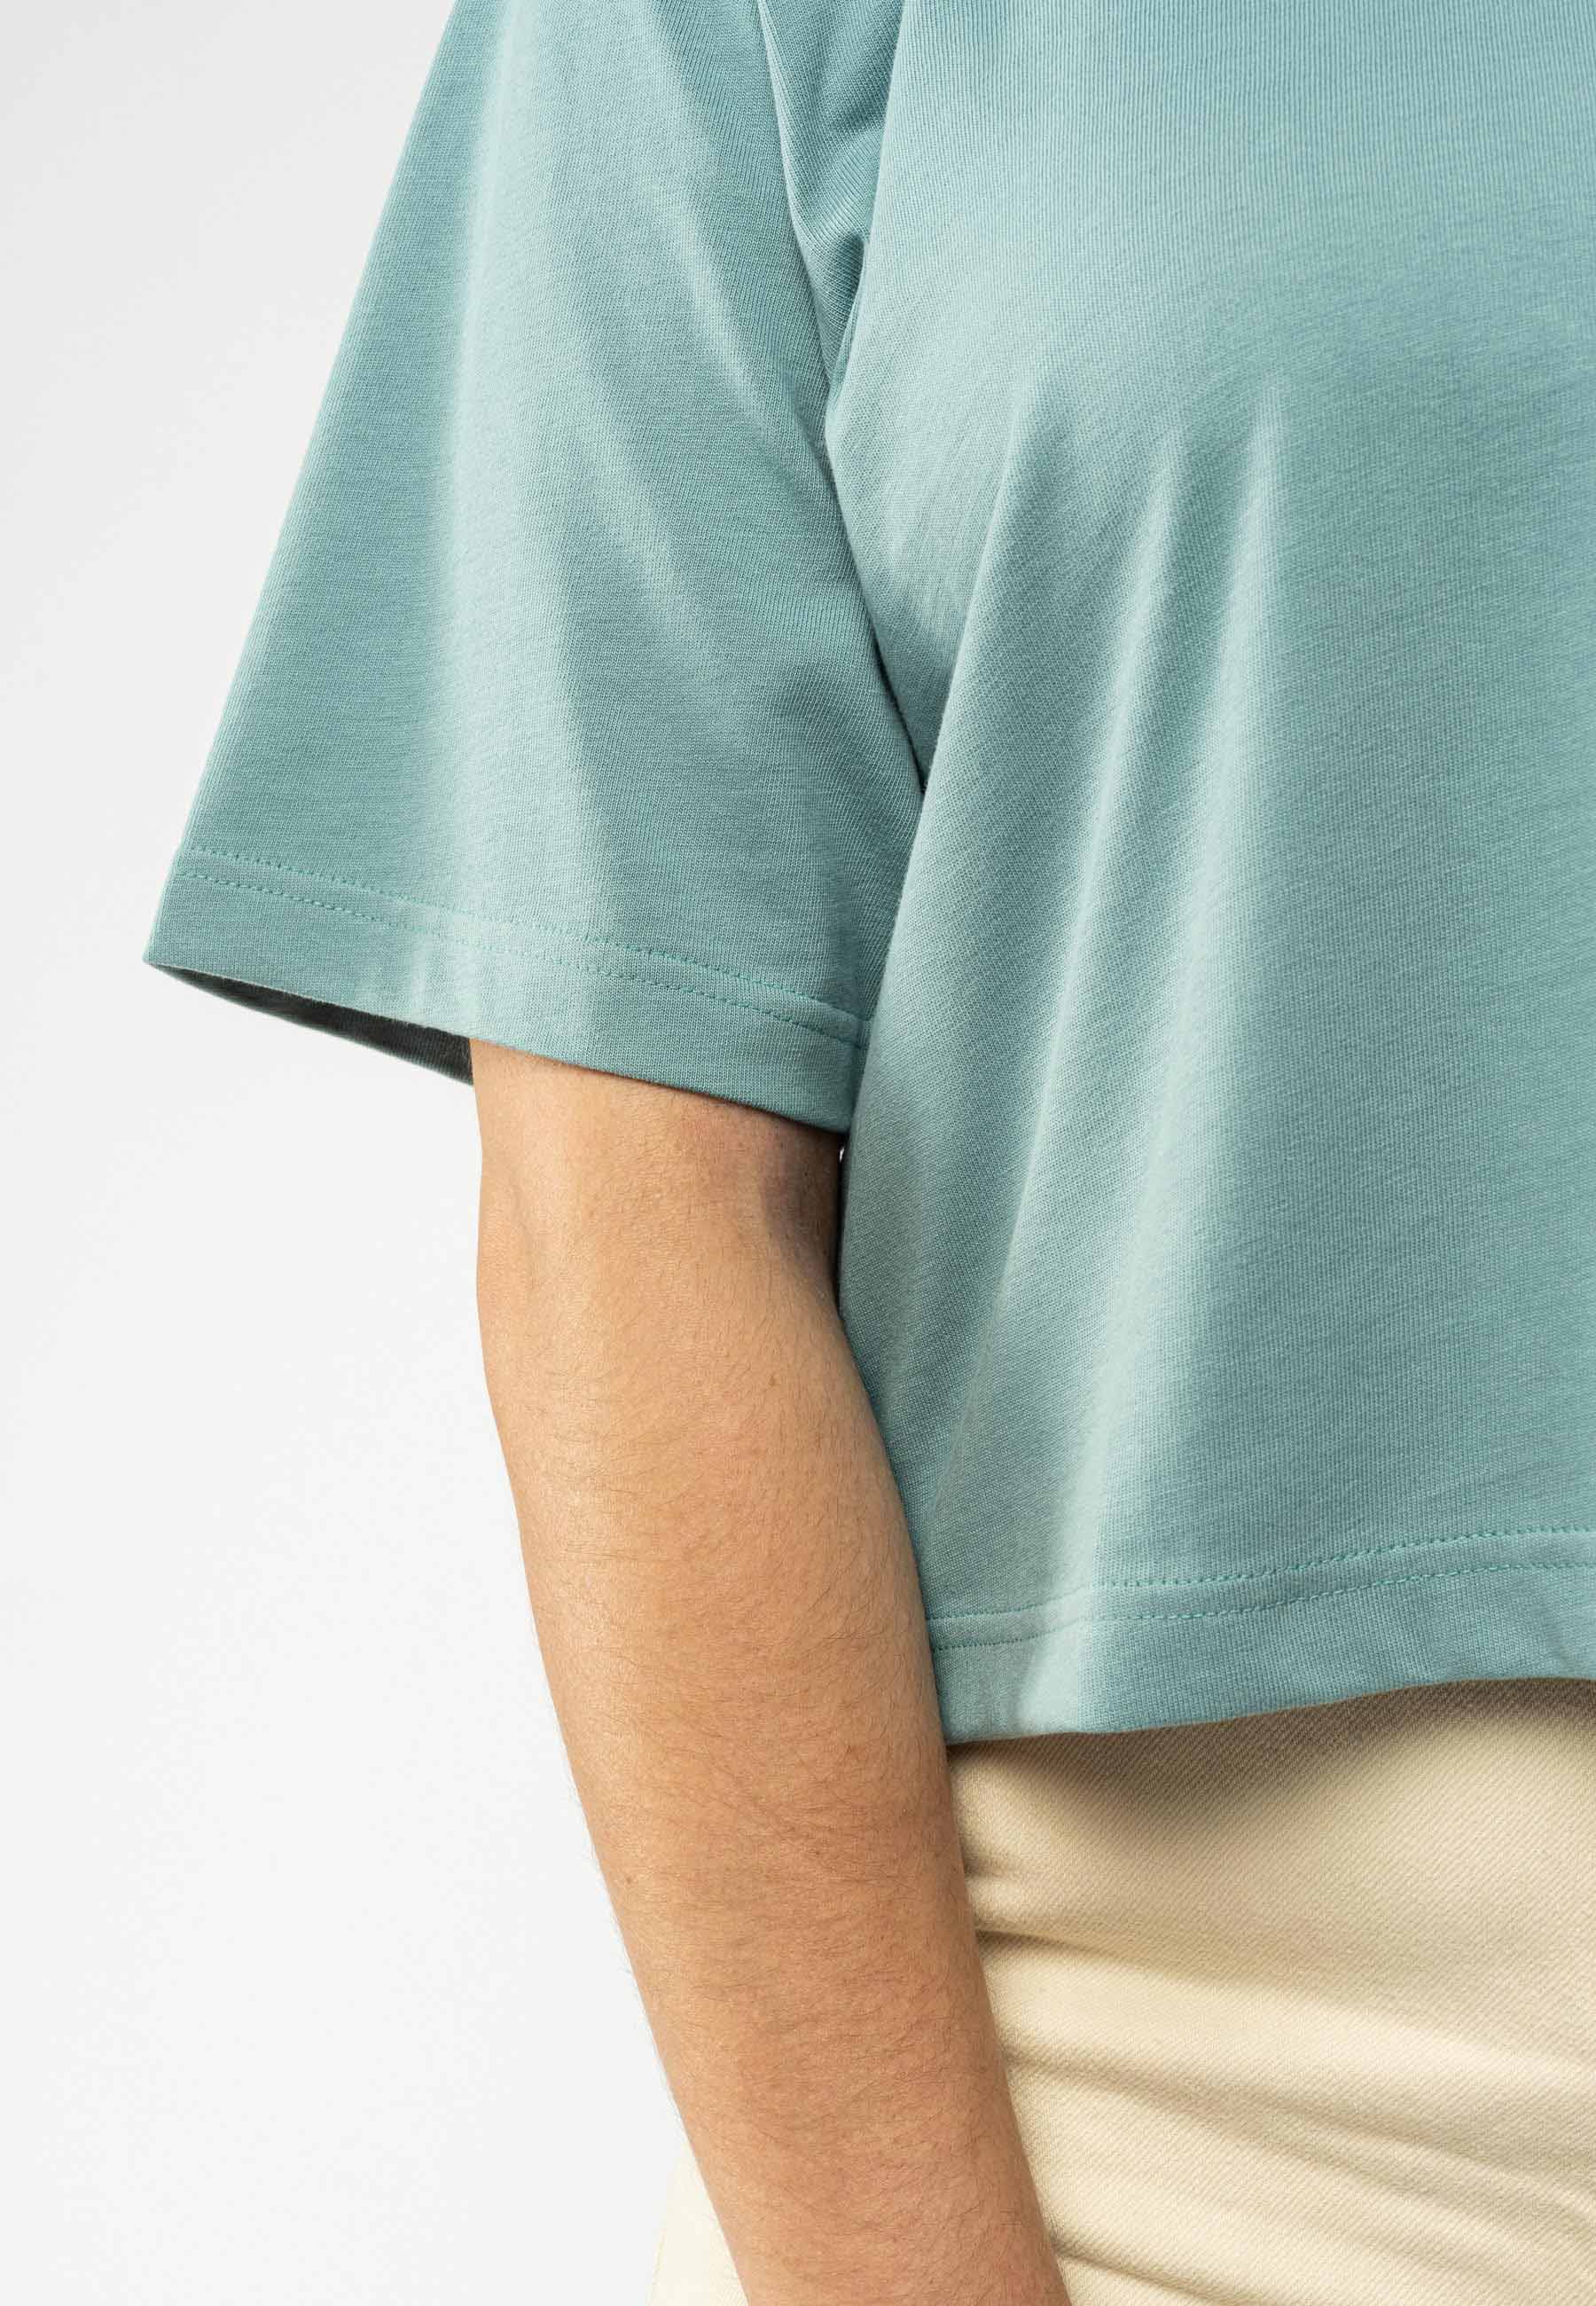 Cropped T-Shirt JANDRA turquoise